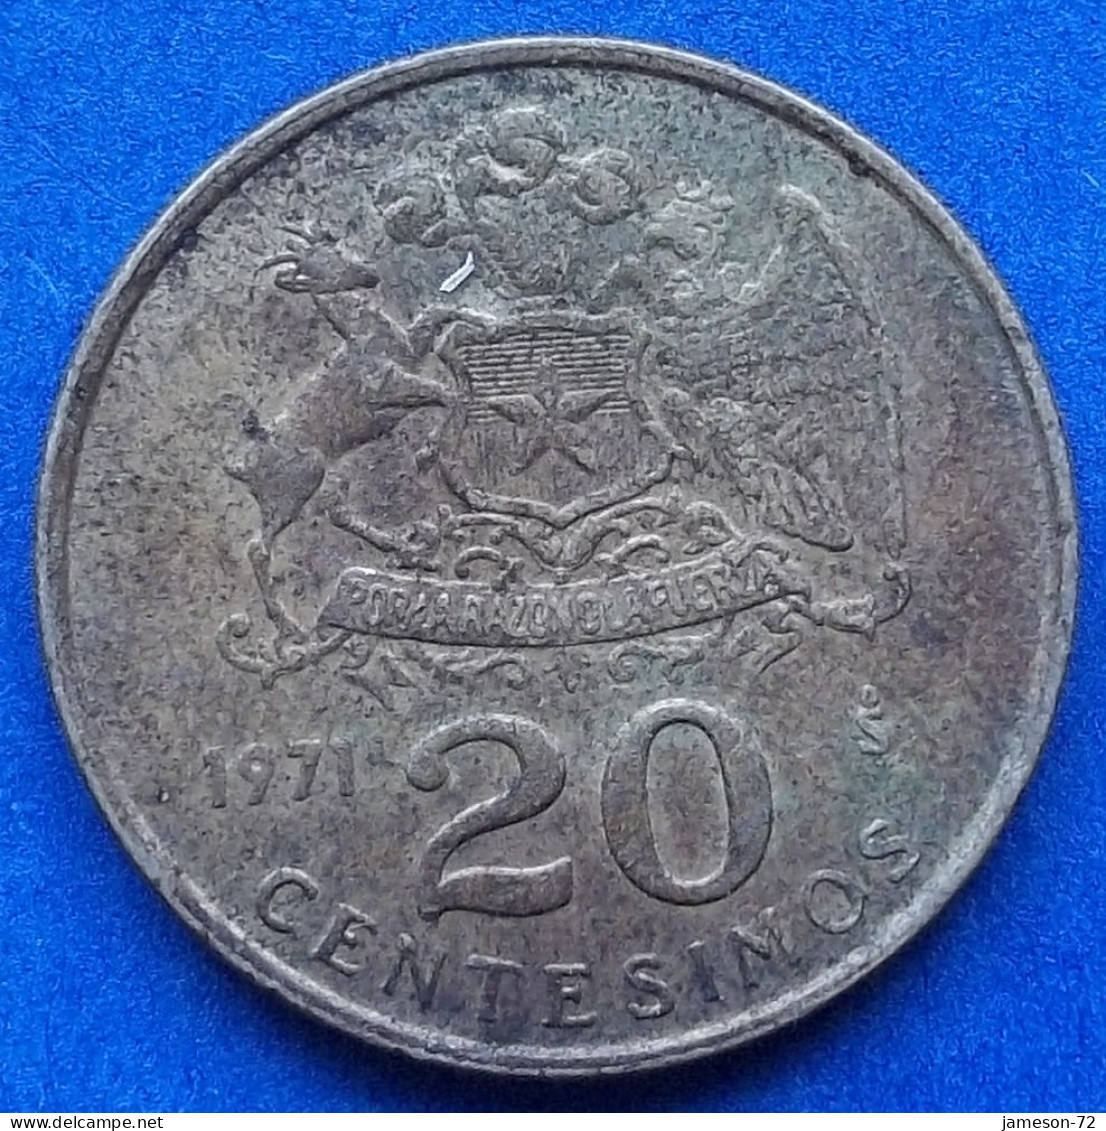 CHILE - 20 Centesimos 1971 "Jose Manuel Balmaceda" KM# 195 Monetary Reform (1960-1975) - Edelweiss Coins - Chile